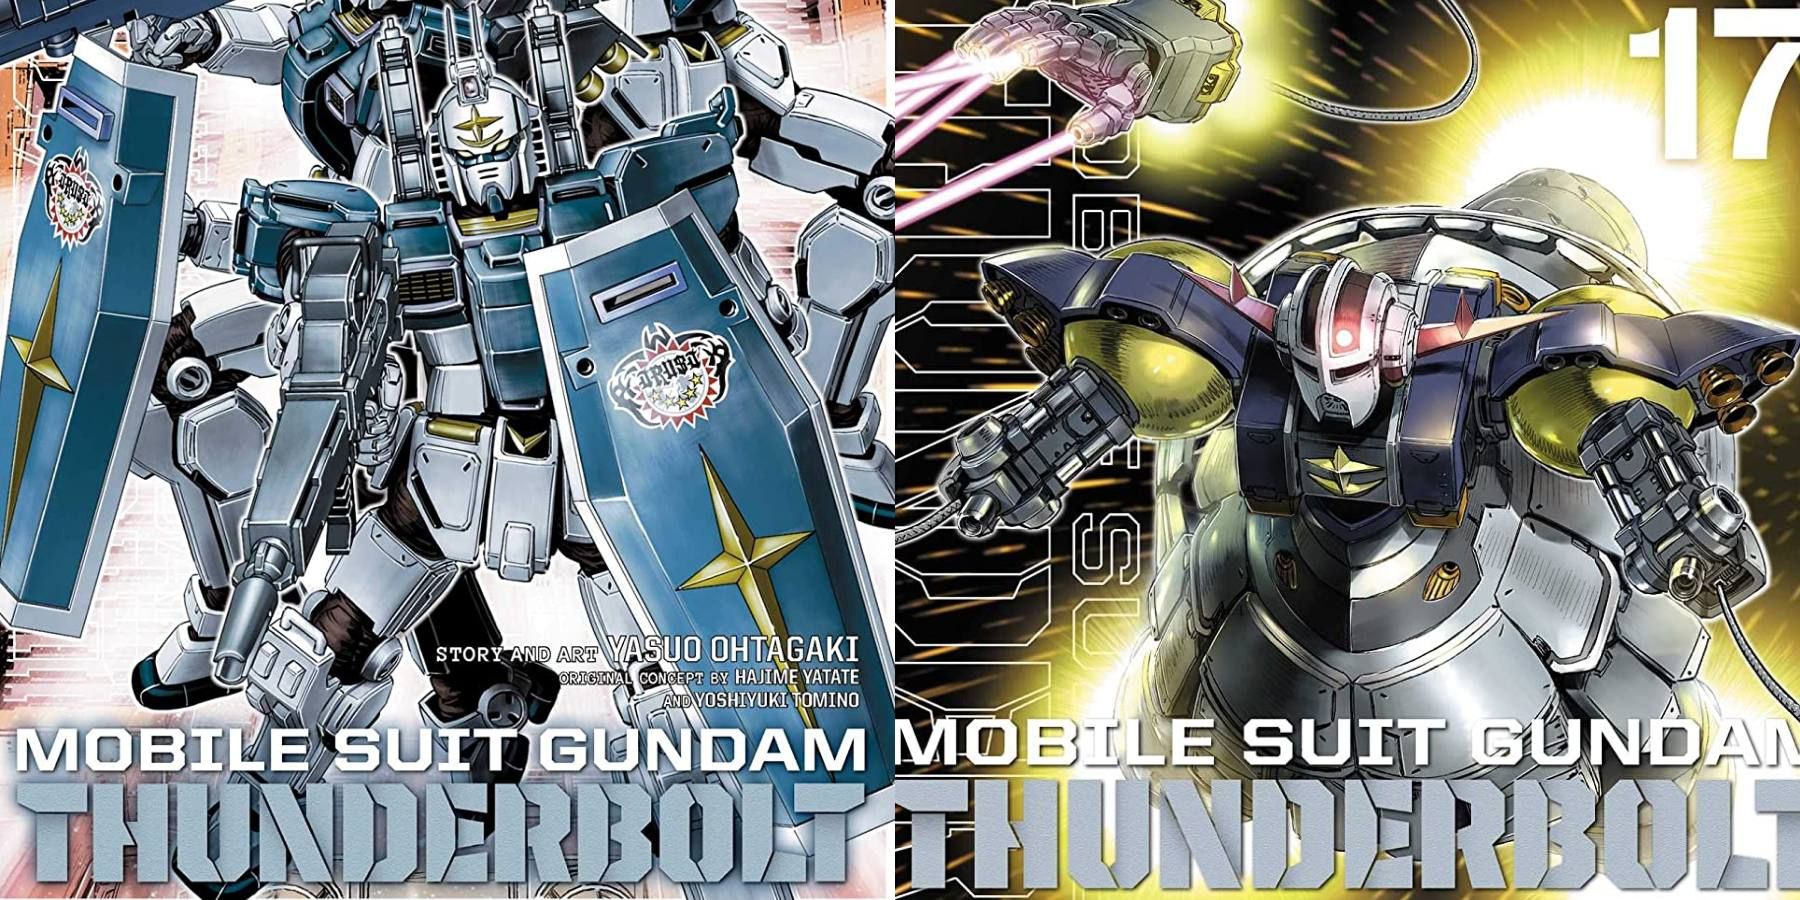 Gundam Thunderbolt Manga Covers